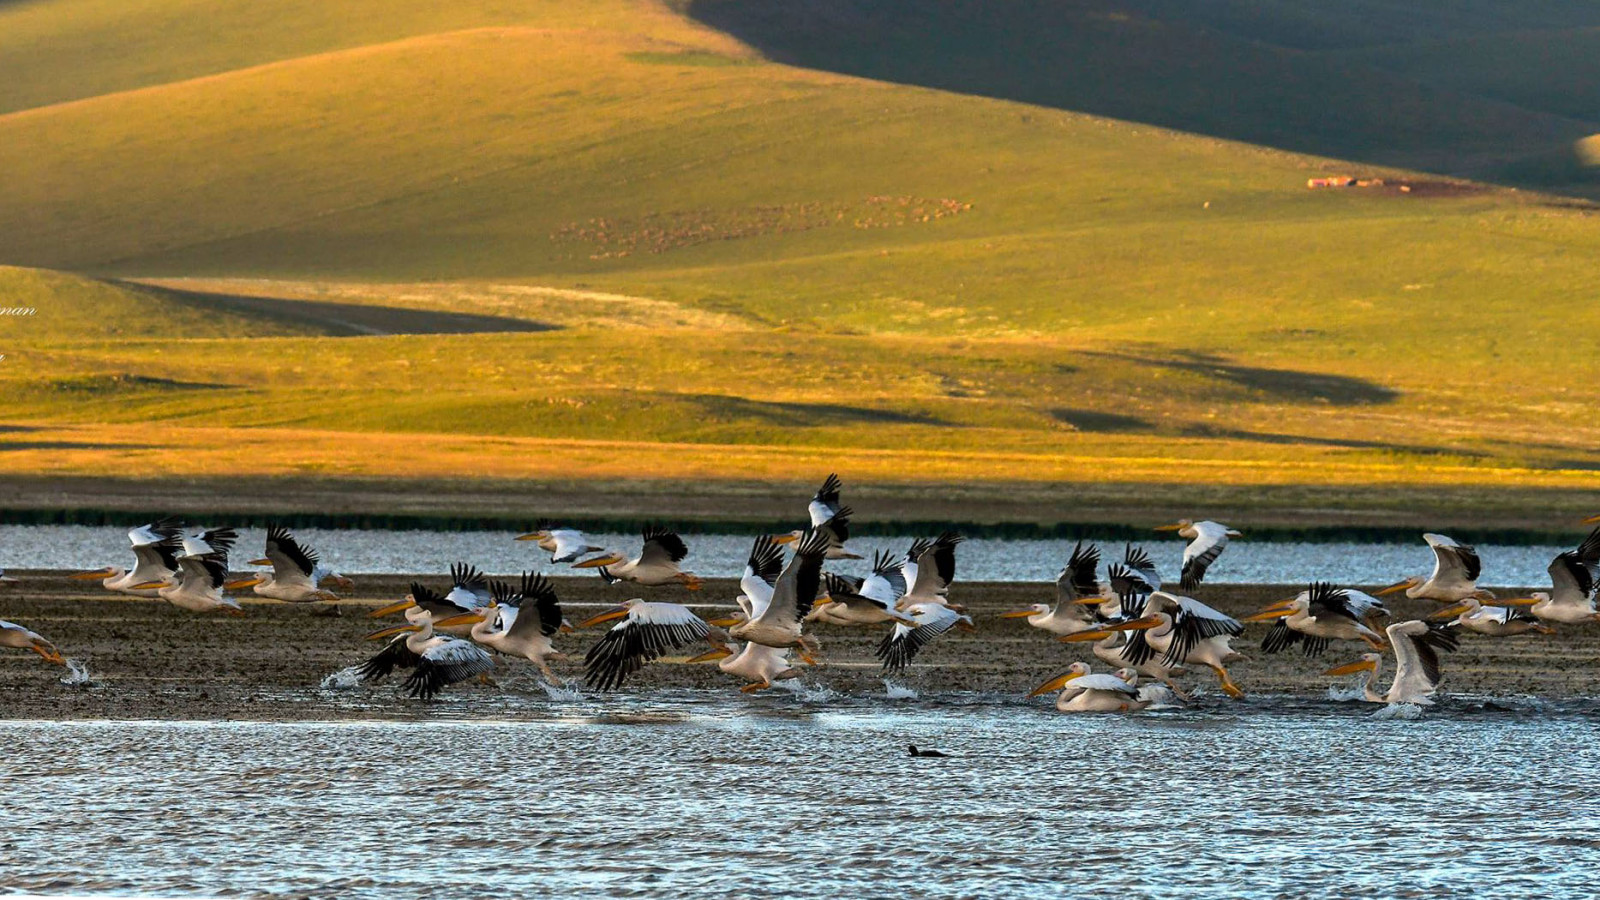 Pelicans, Javakheti, Georgia by Tolordava